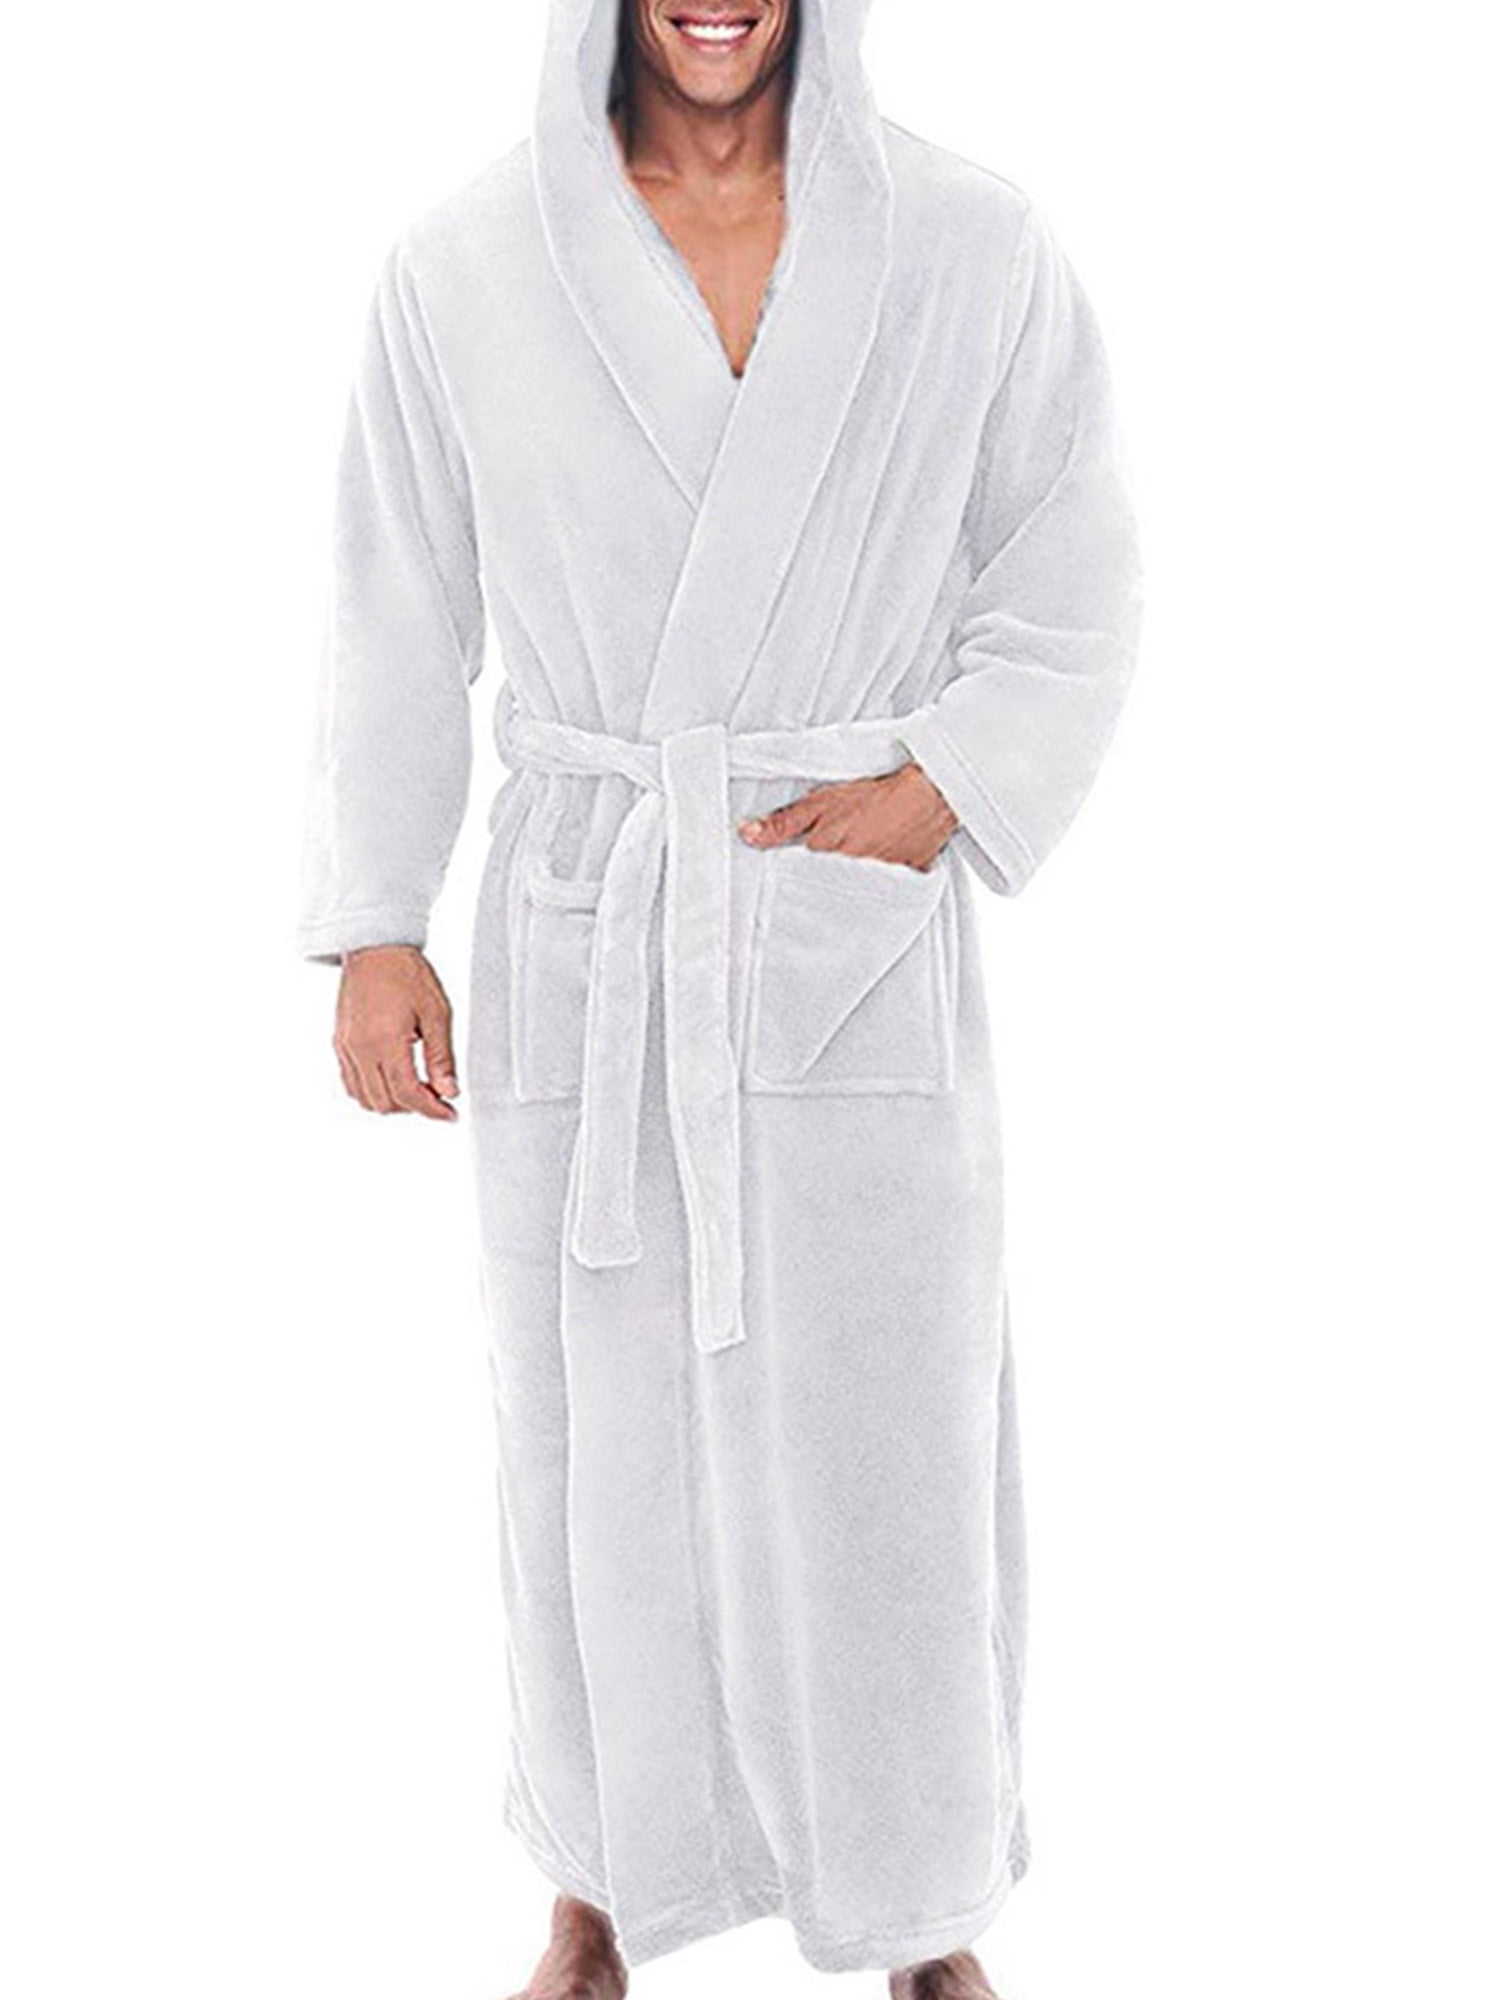 Chinese Style Winter Mens Bath Robe Long Sleeve Coral Fleece Pajamas For Men  Bathrobe Male Kimono Dressing Gowns Sleepwear CJ191220 From Quan03, $40.63  | DHgate.Com